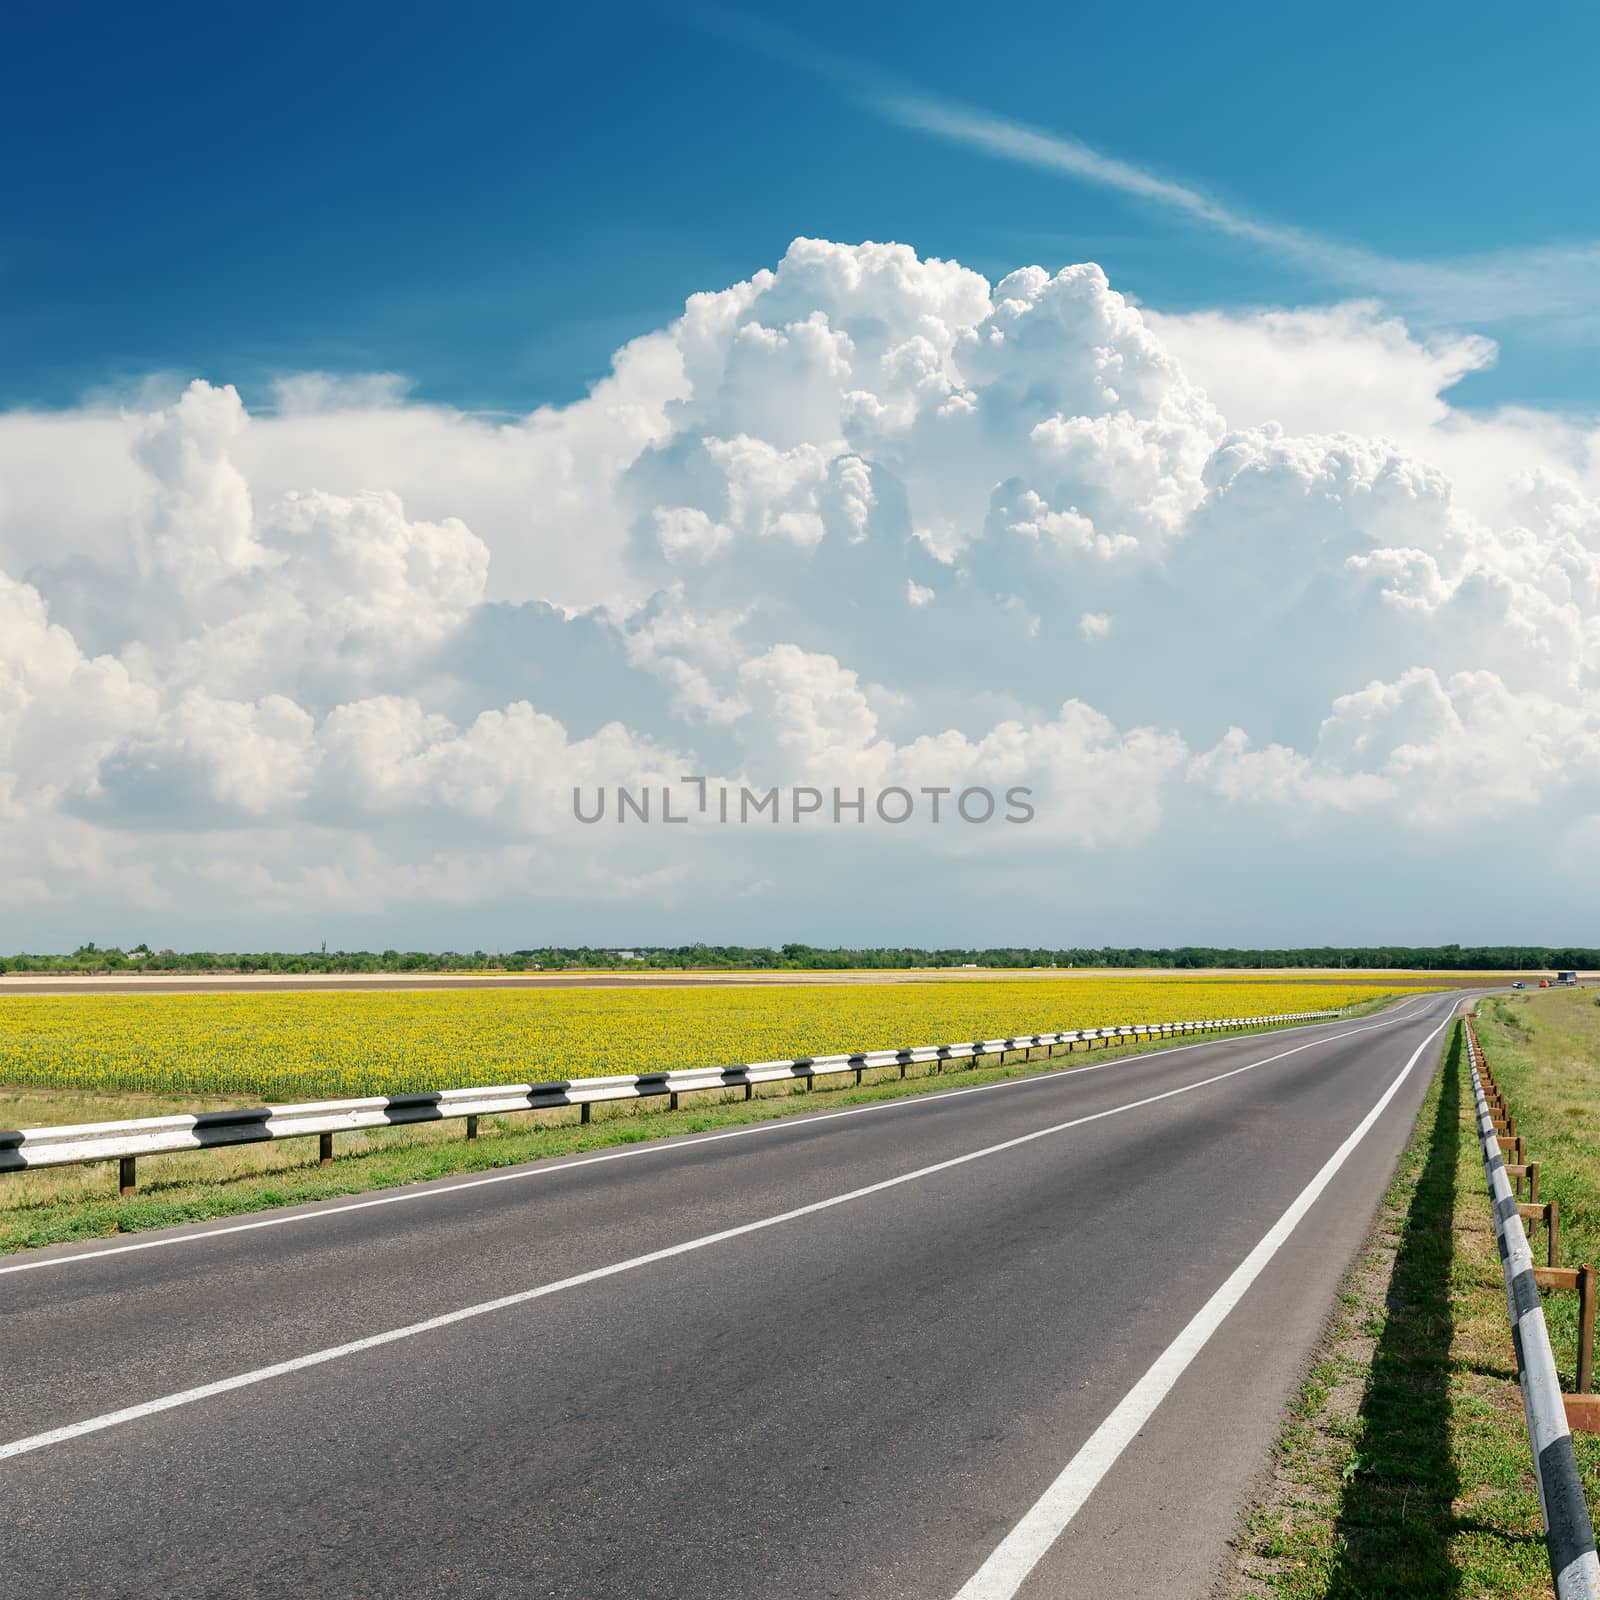 asphalt road goes to cloudy horizon